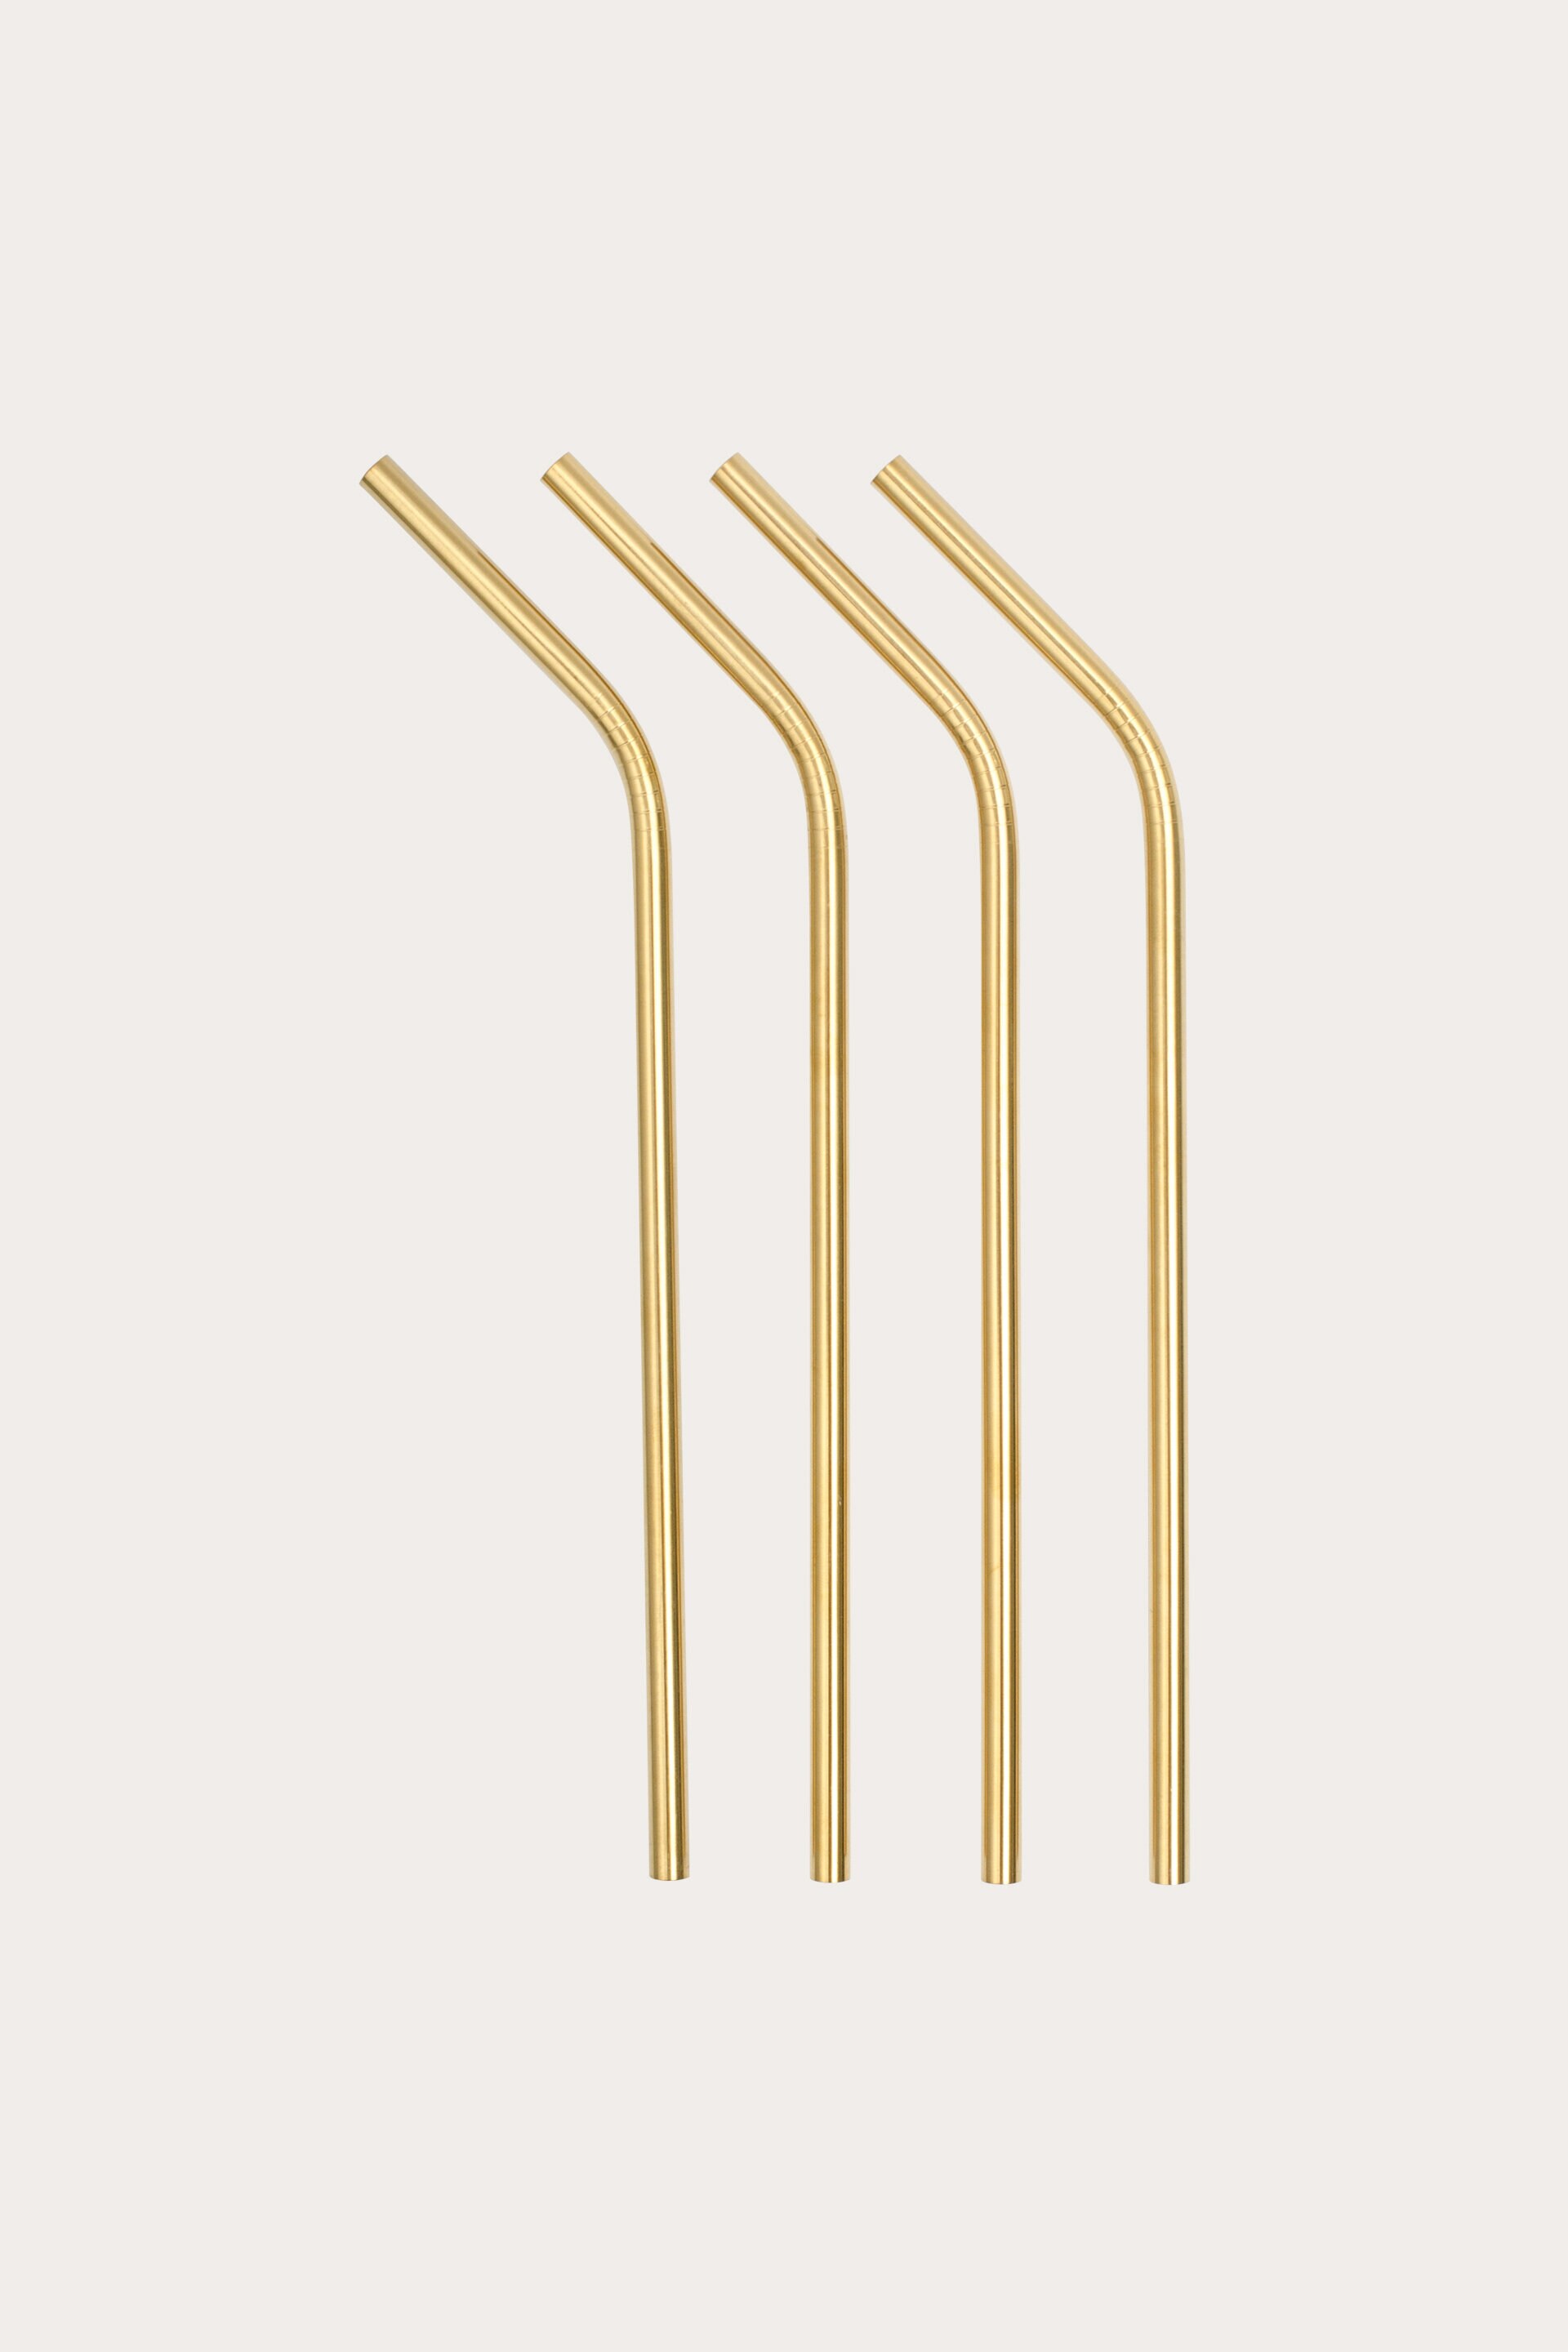 Gold Bent Stainless Steel Drinking Straws Metal Straw 10 PCS 21cm 